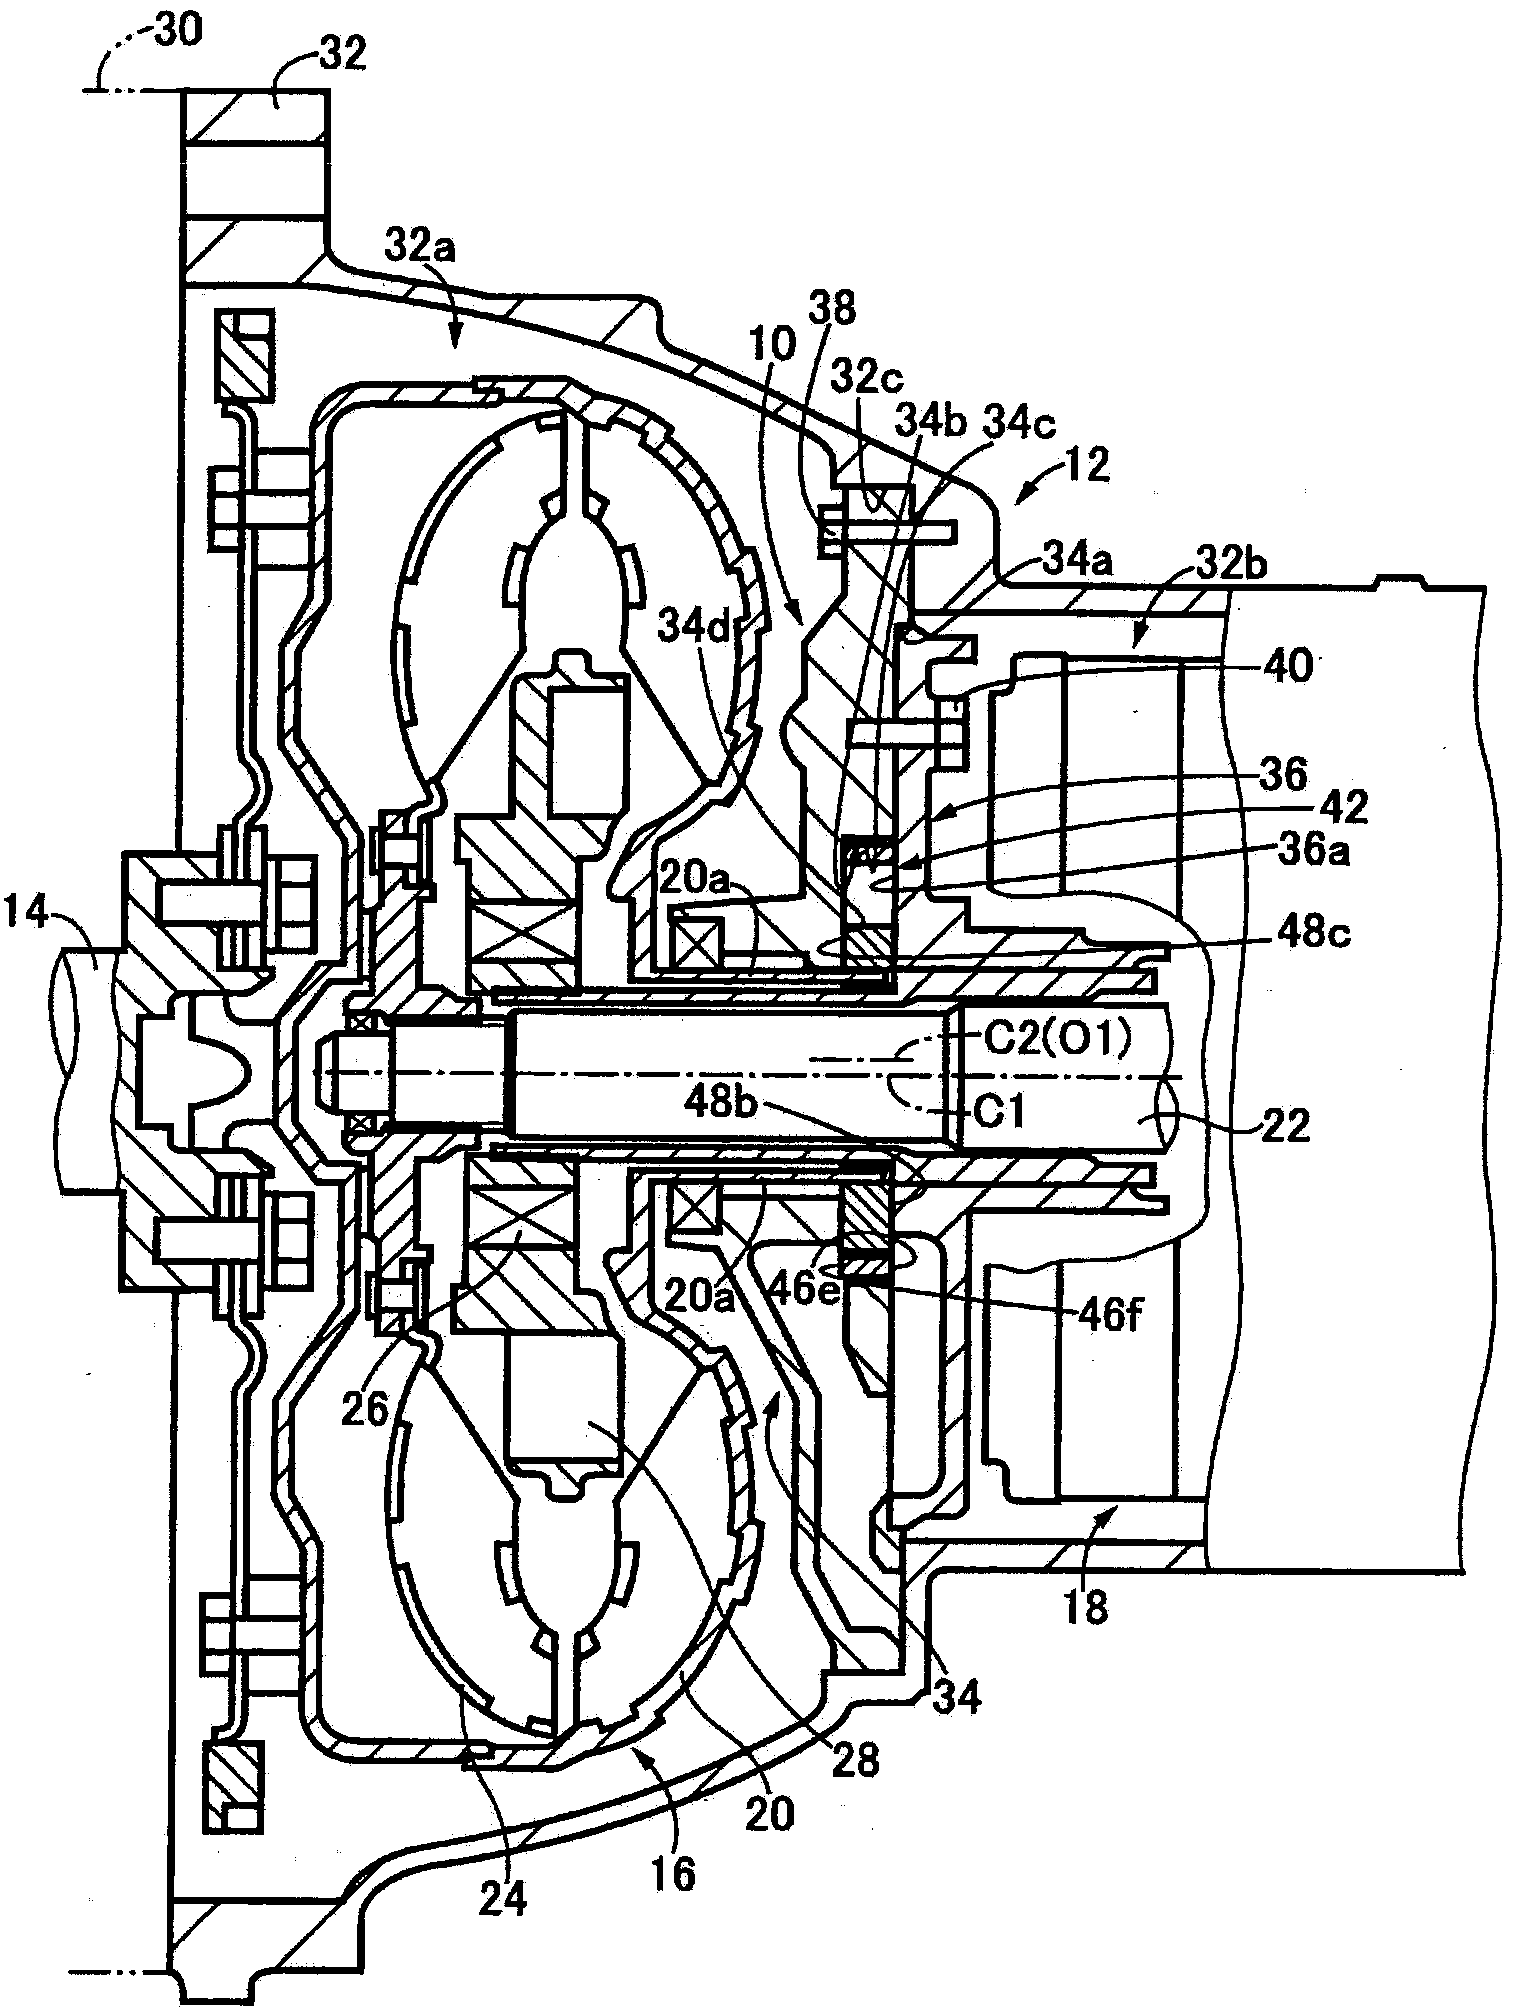 Internal-gear-type oil pump for vehicle